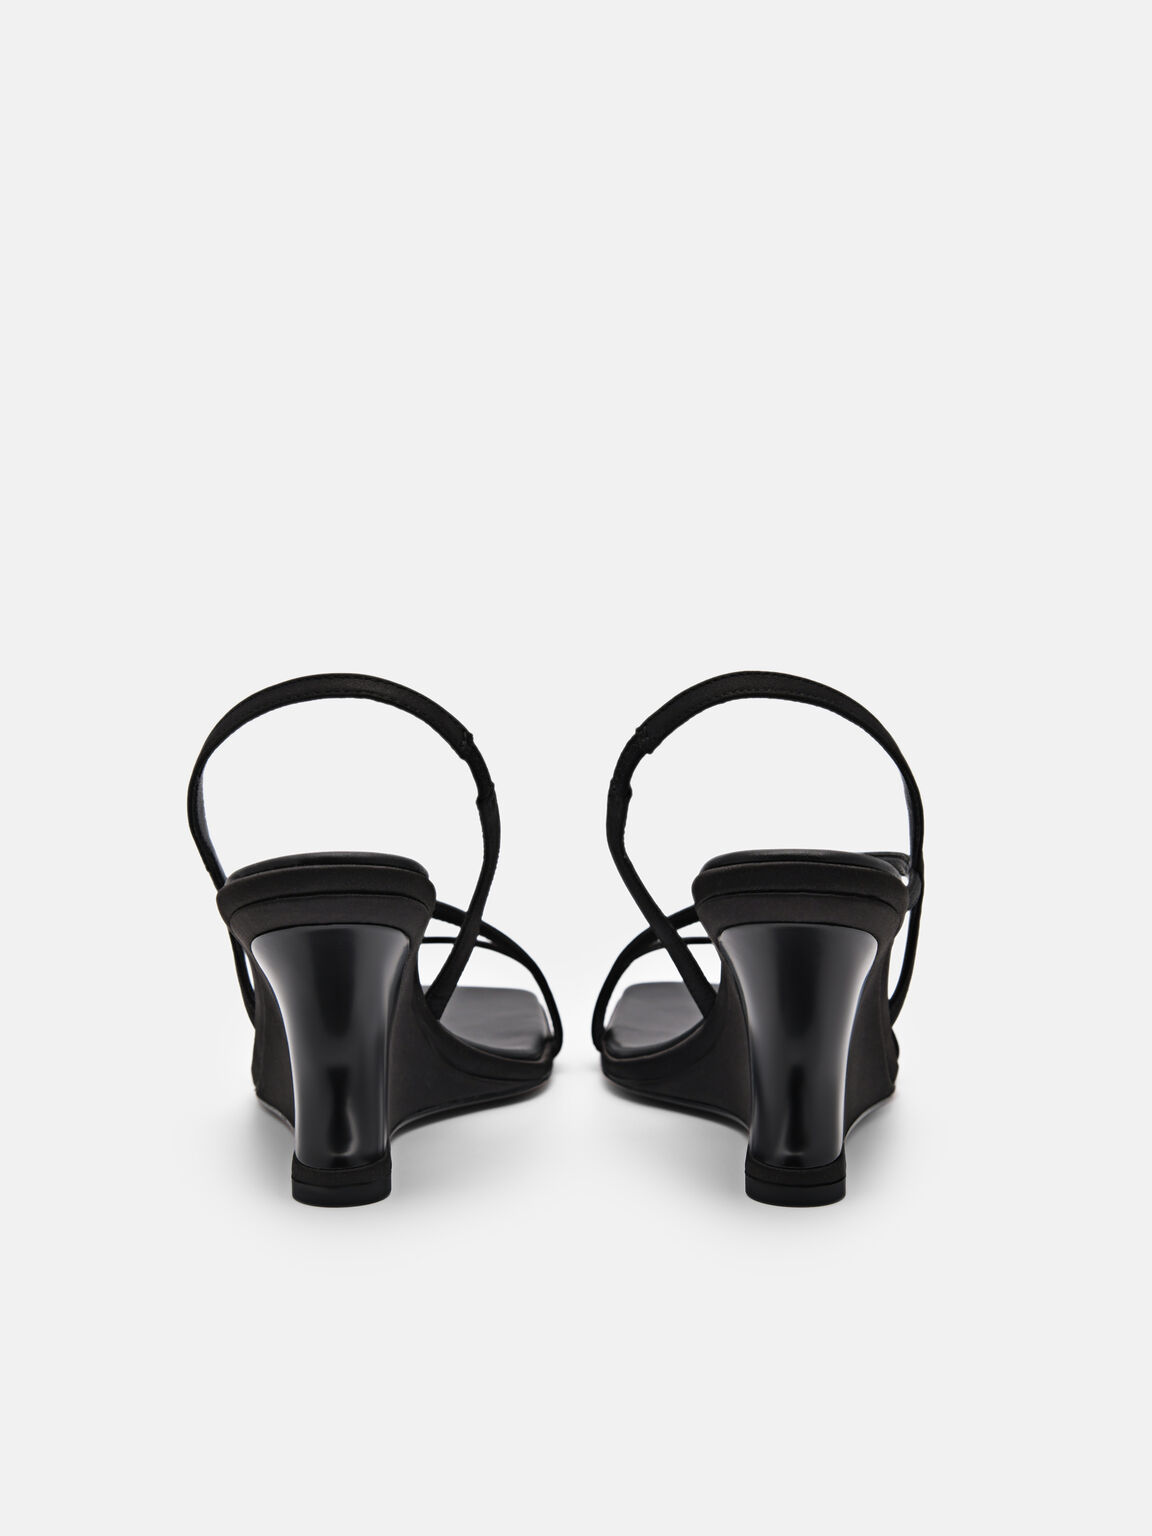 Oriana Wedge Sandals, Black, hi-res